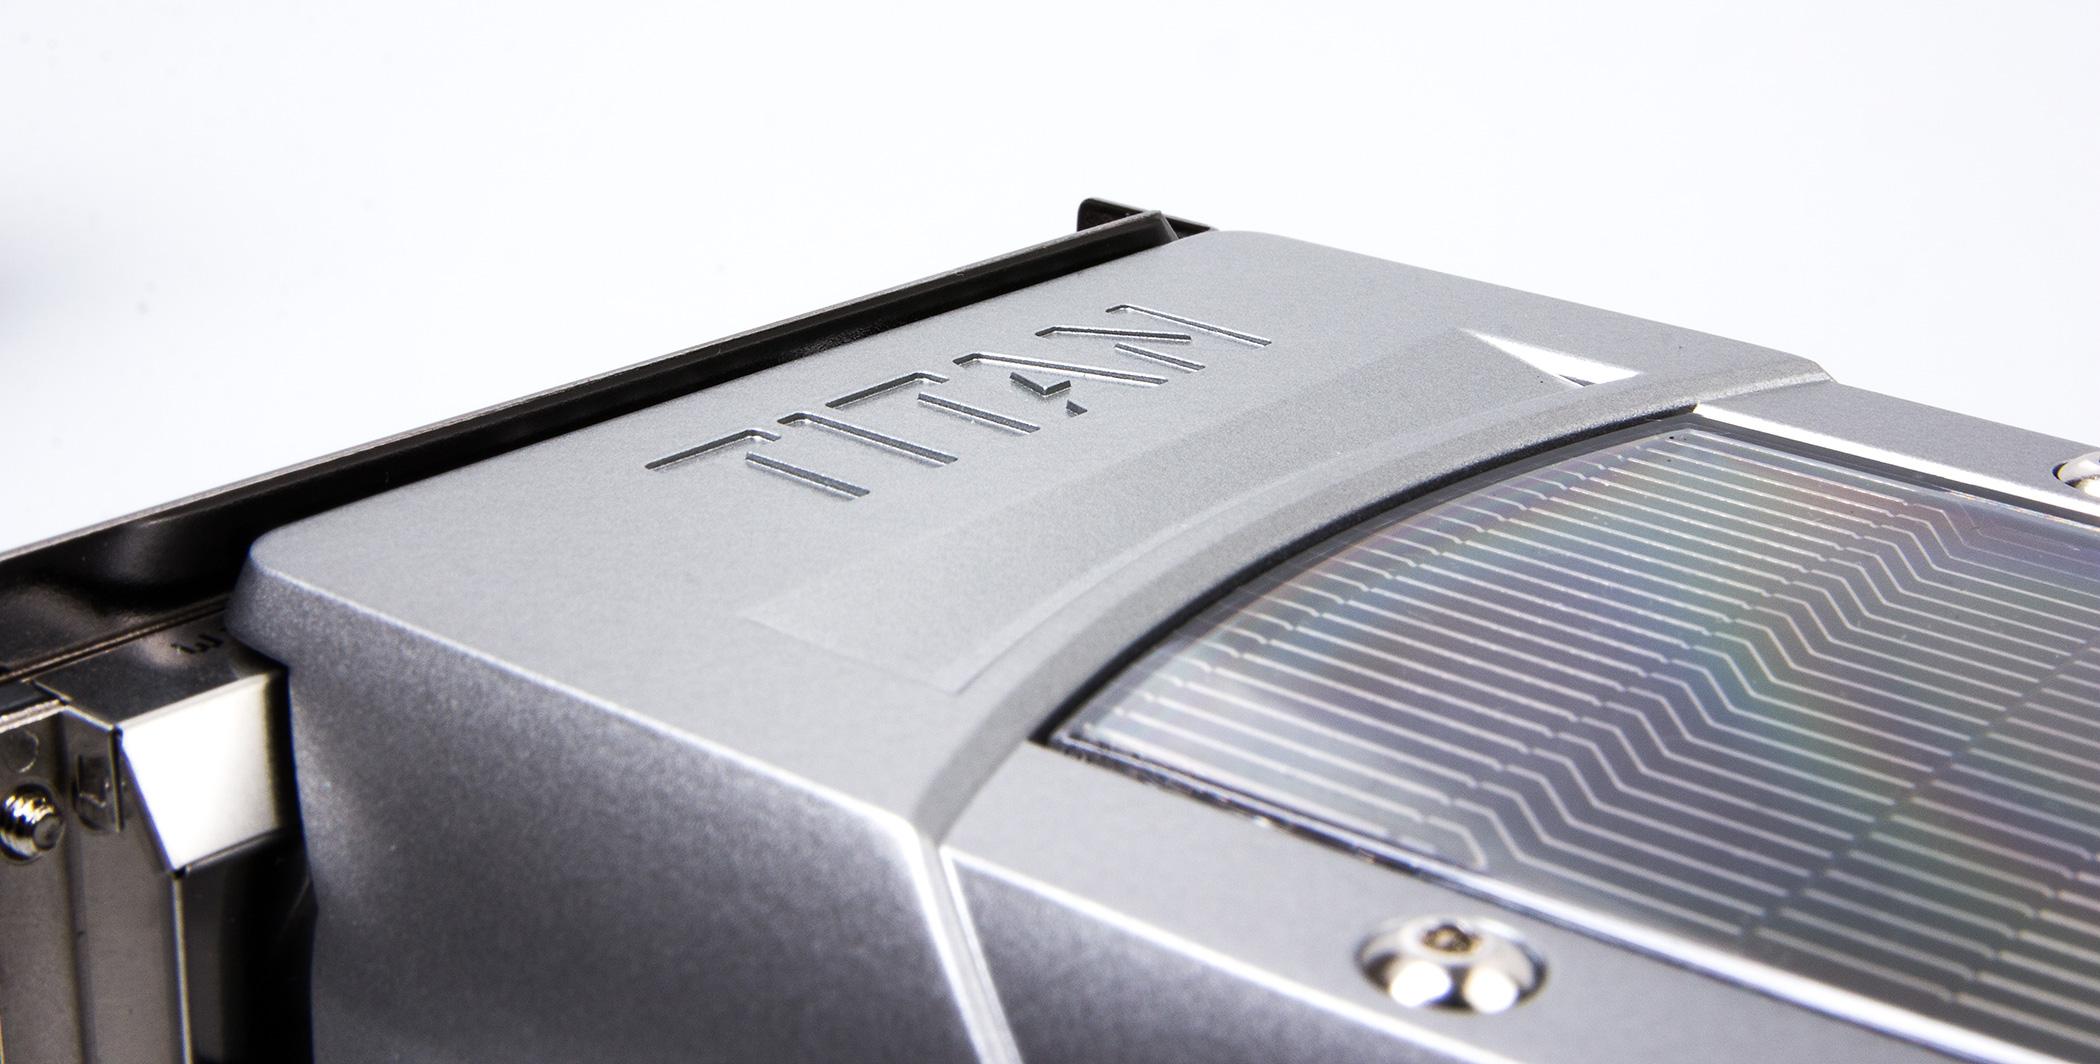 GeForce GTX Titan leverer en superglatt bildeflyt, og fungerer i dag som et referansekort.Foto: Varg Aamo, Hardware.no